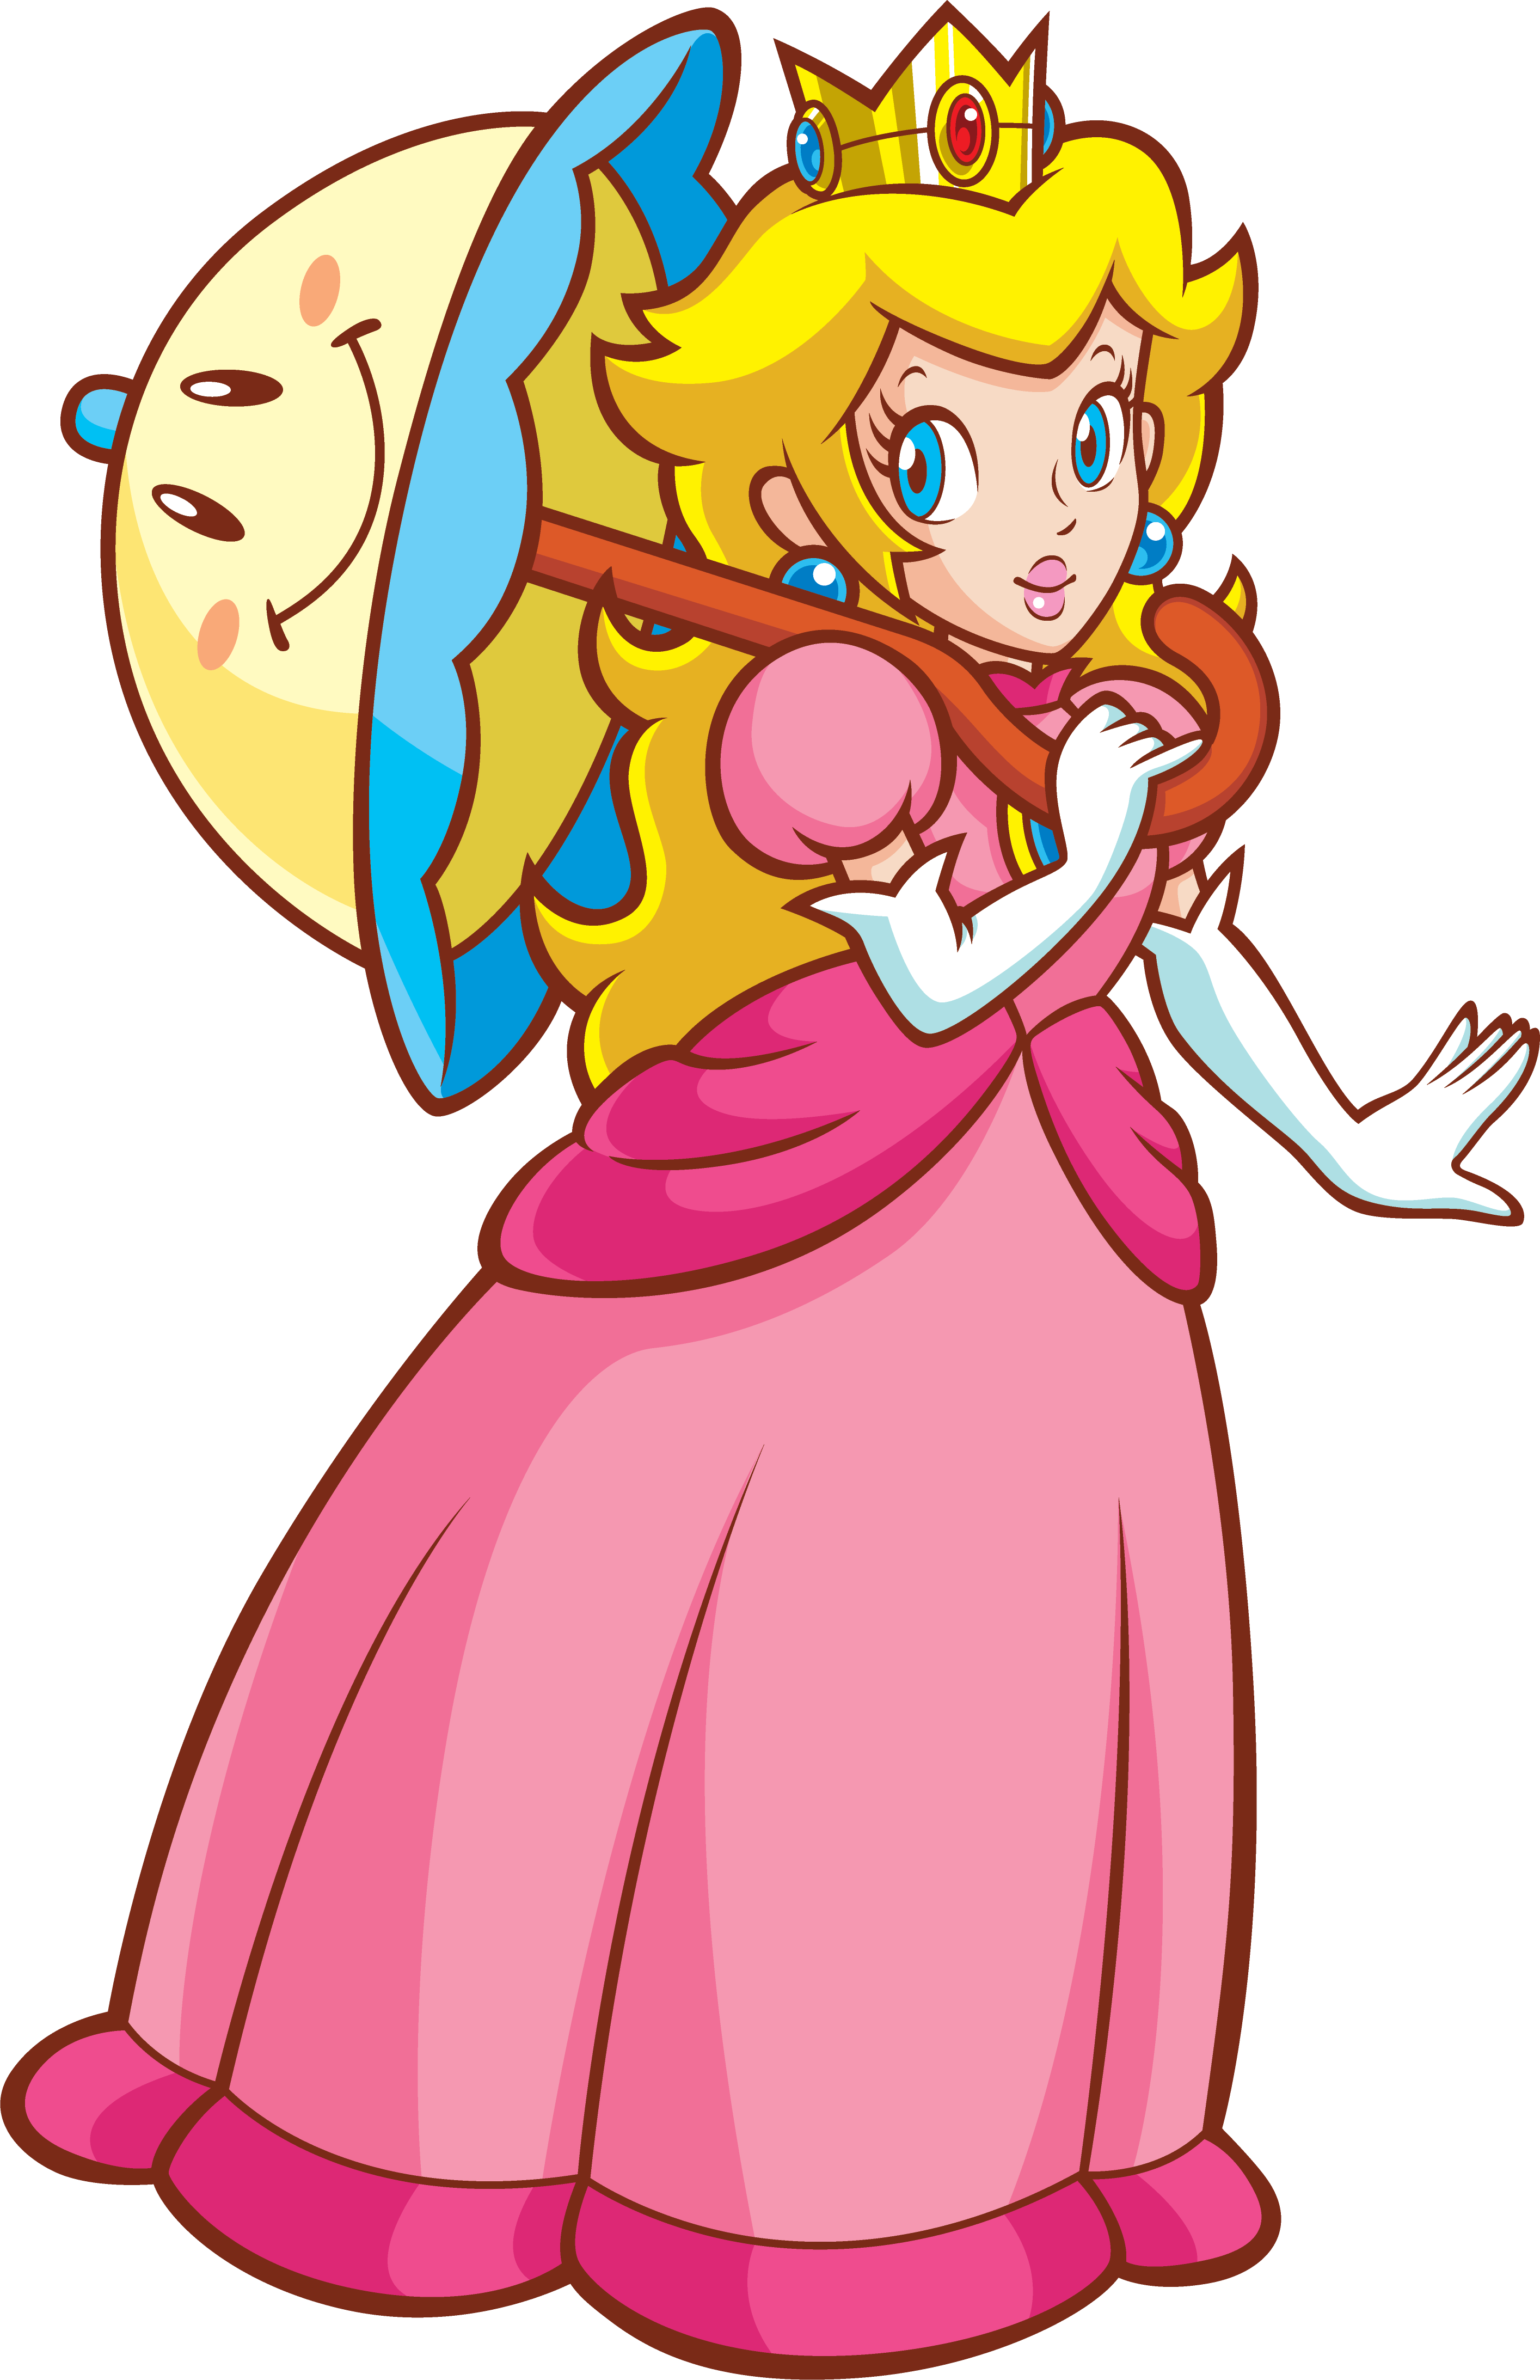 Fileprincess Peach And Perry Super Princess Peachpng Super Mario Wiki The Mario Encyclopedia 1372